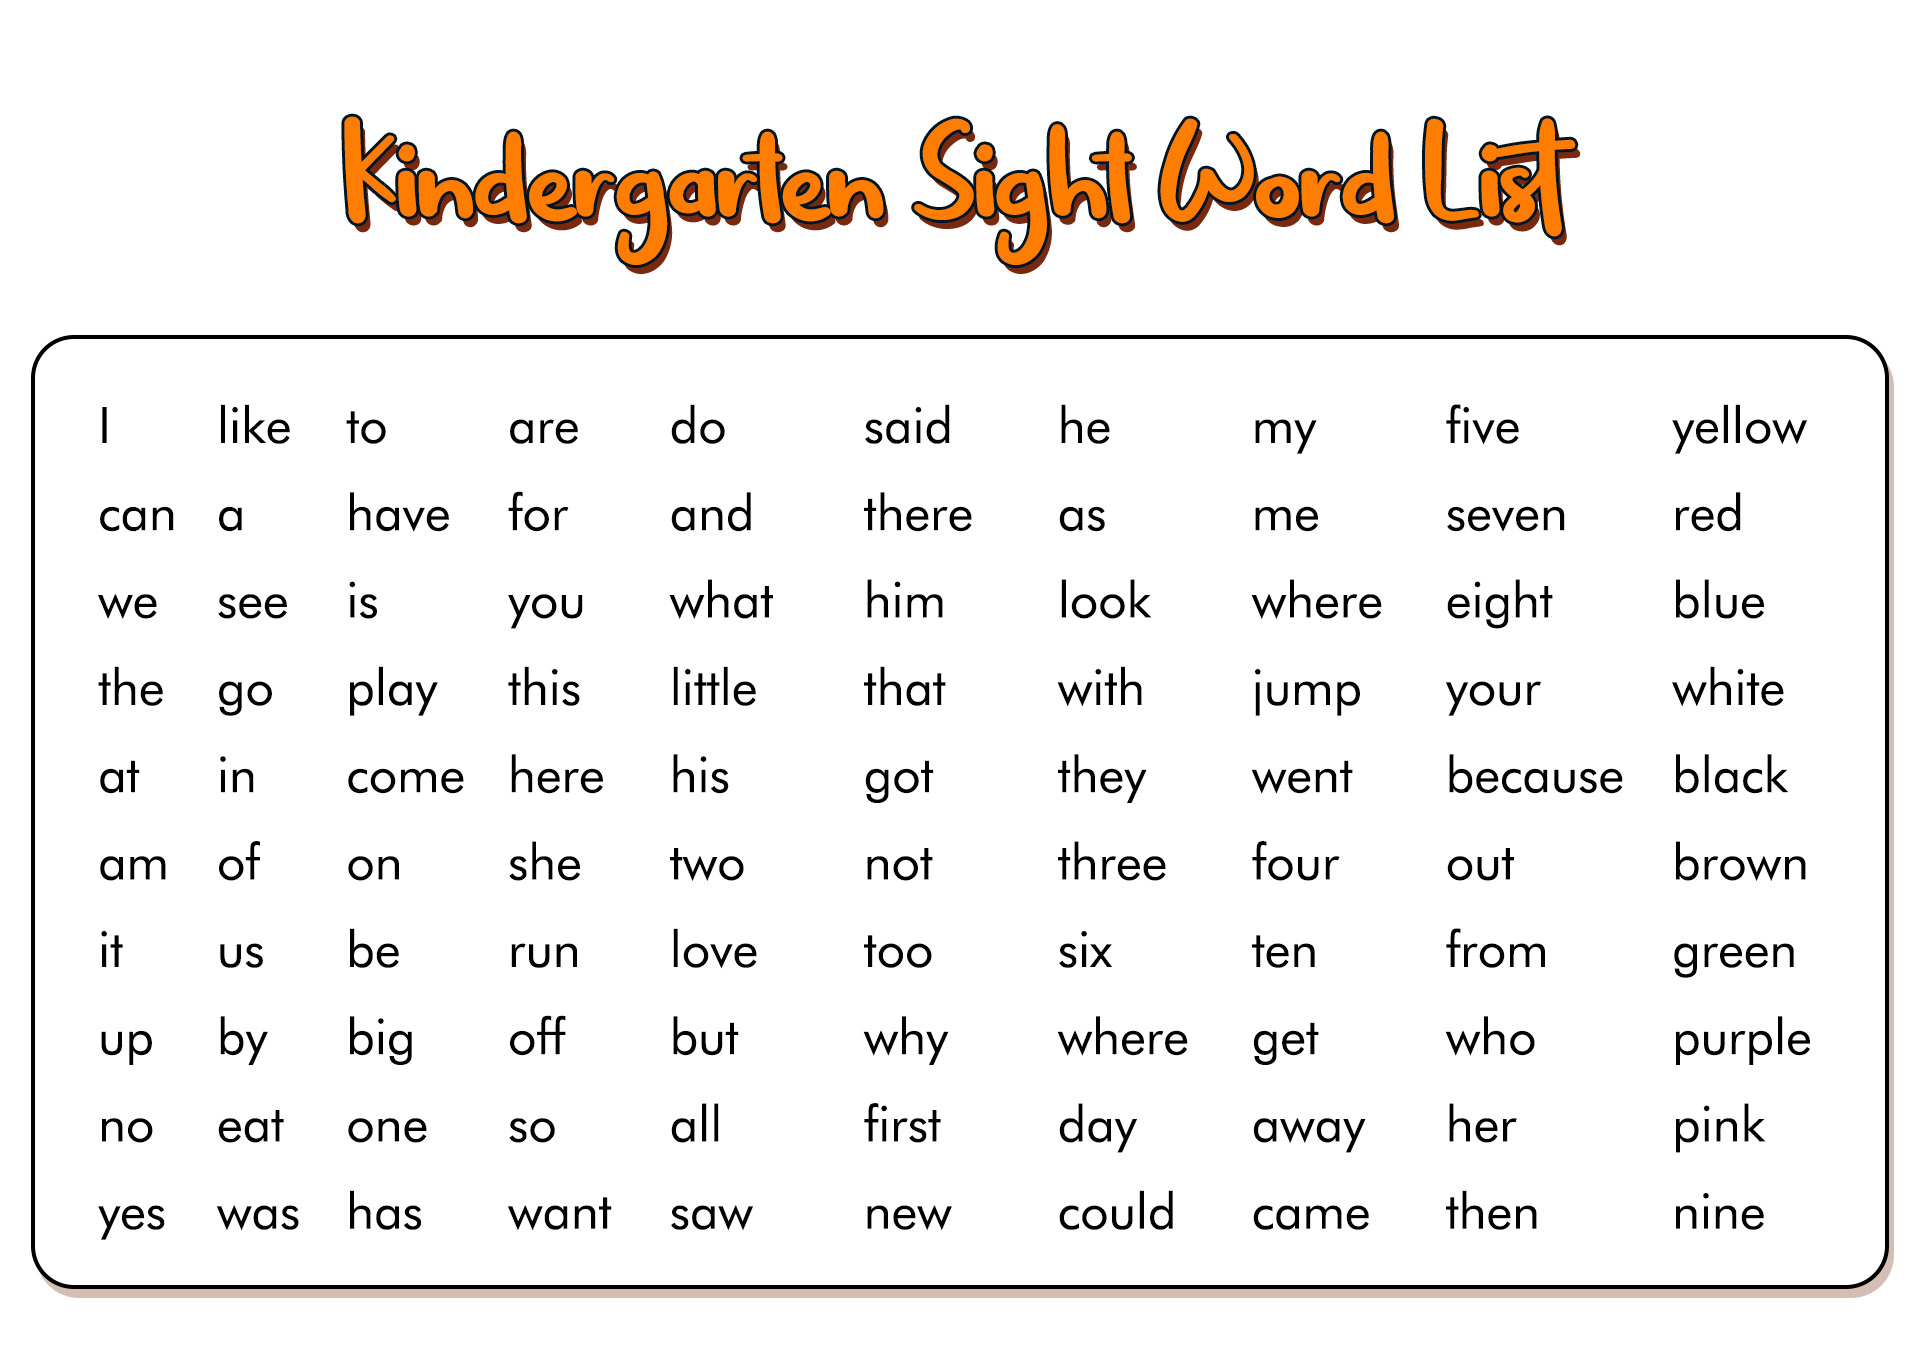 Sight Words For Kindergarten Printable List